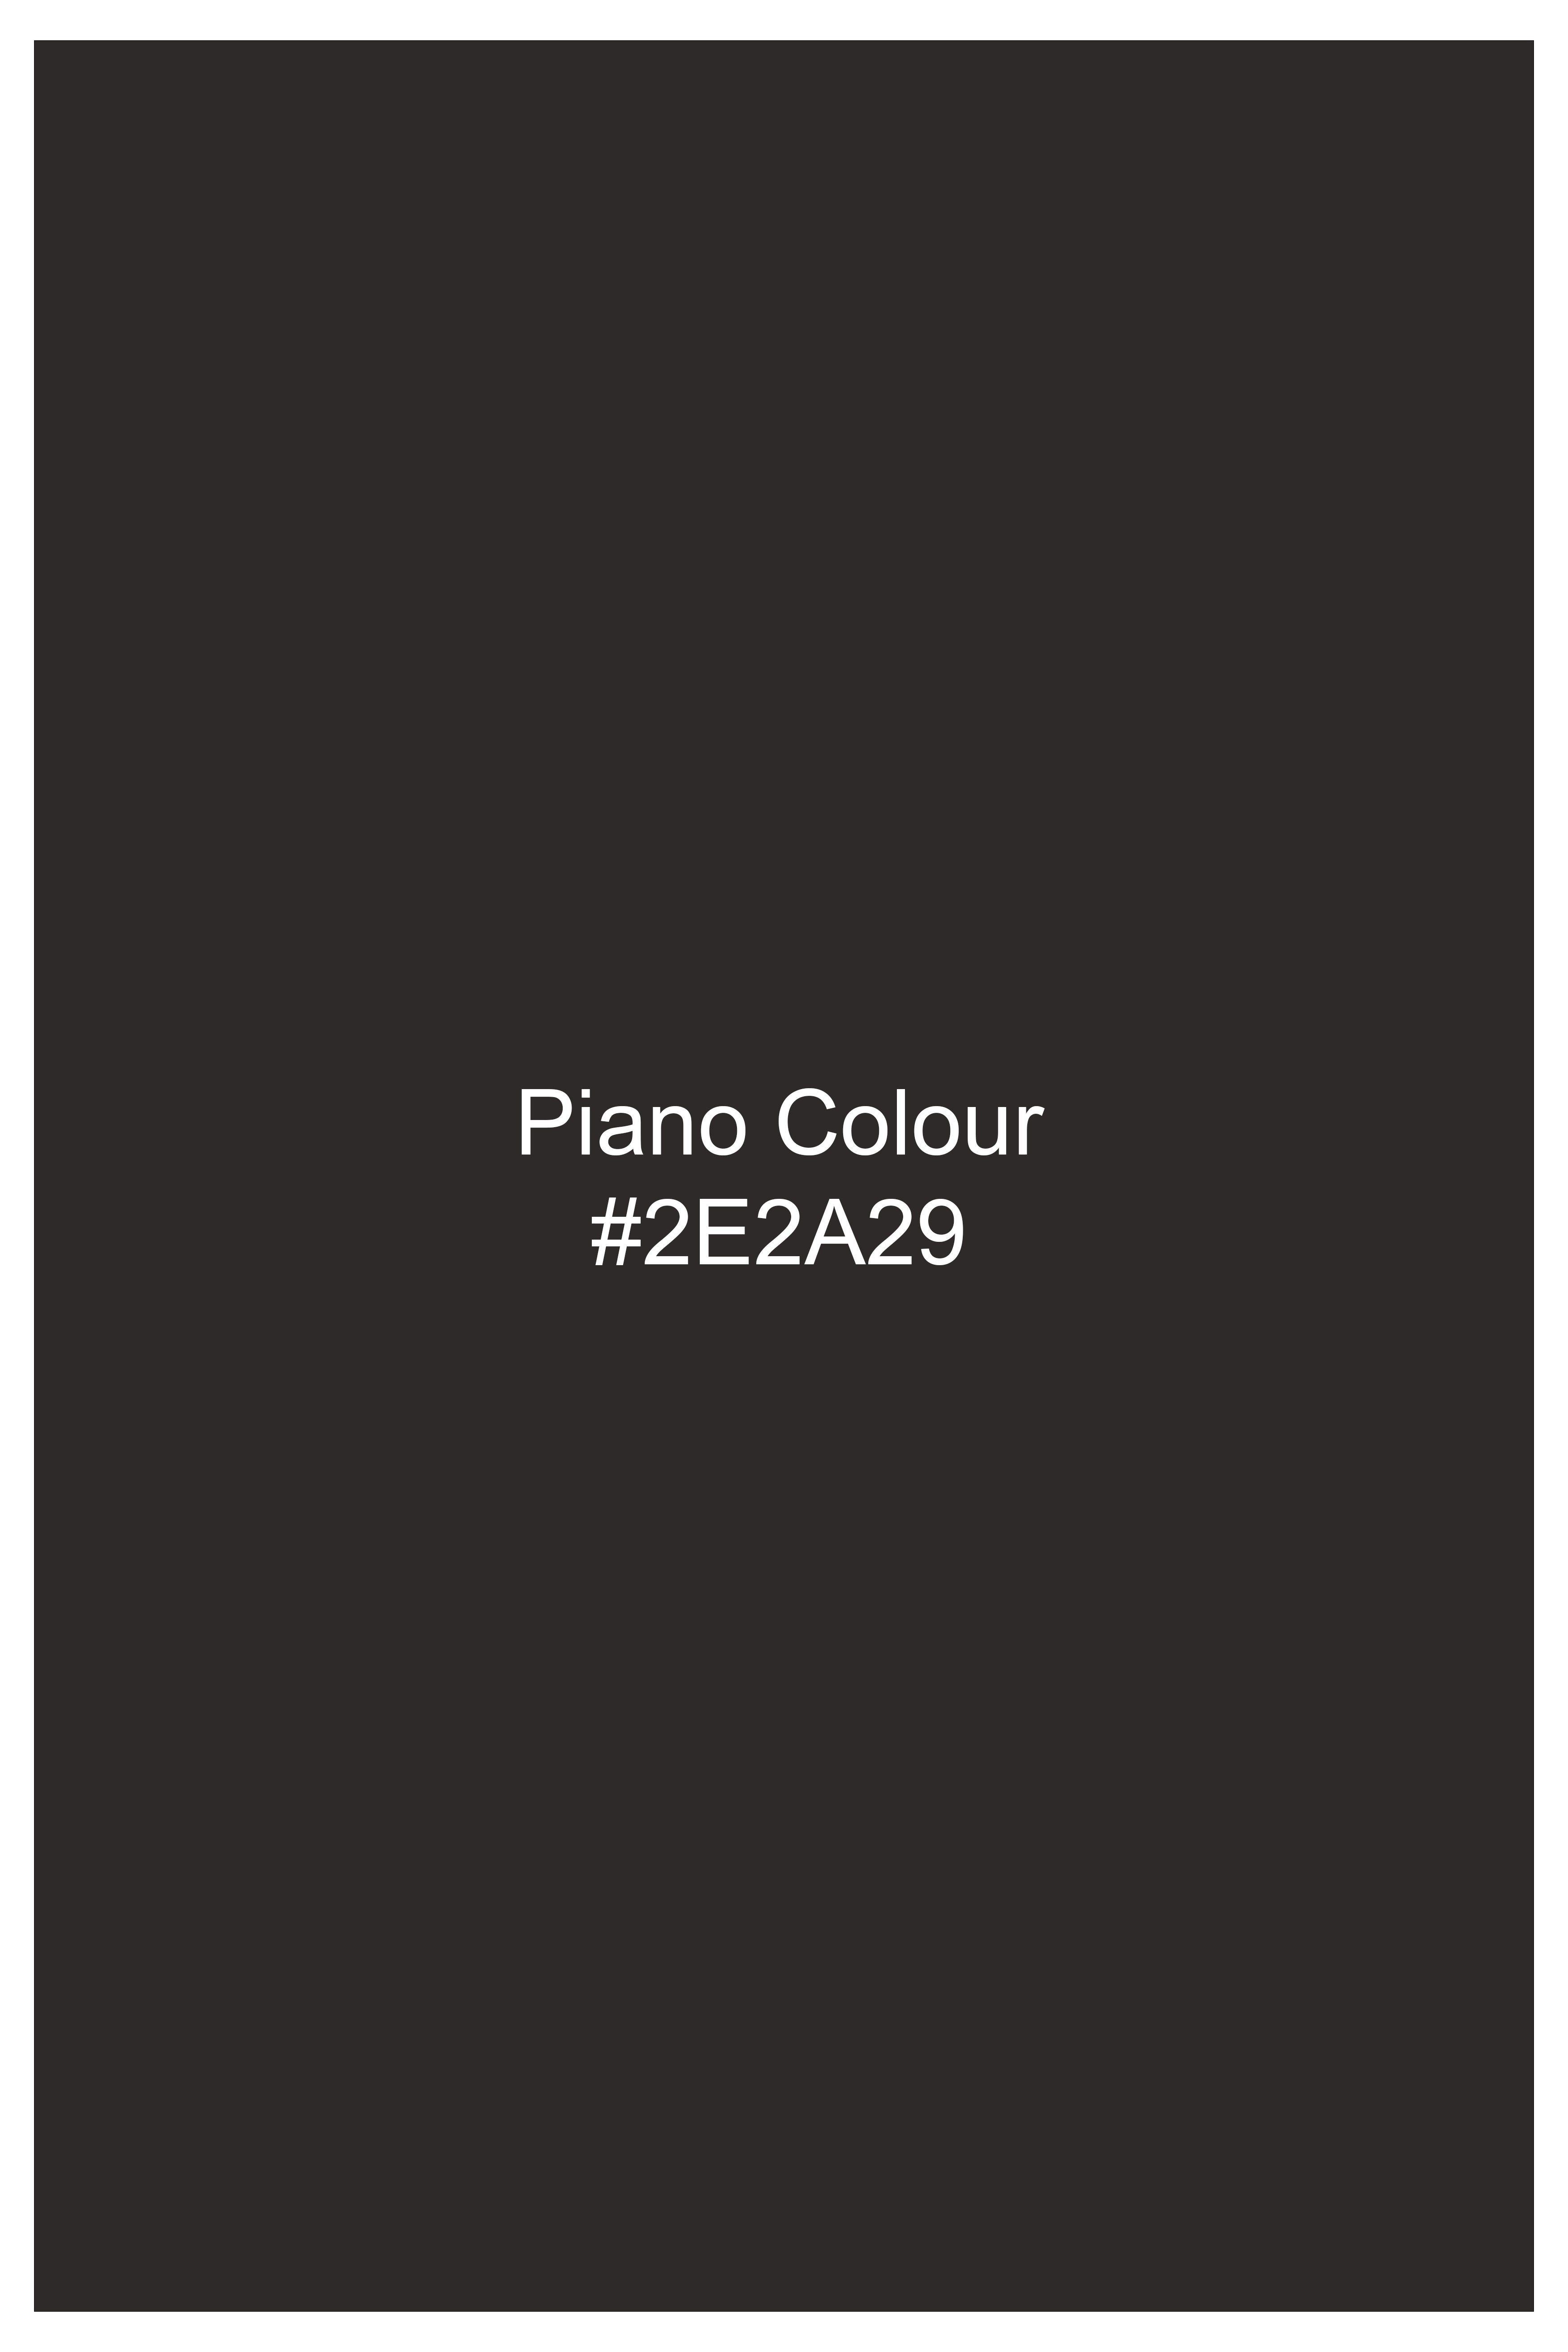 Piano Brown Plaid Tweed Pant